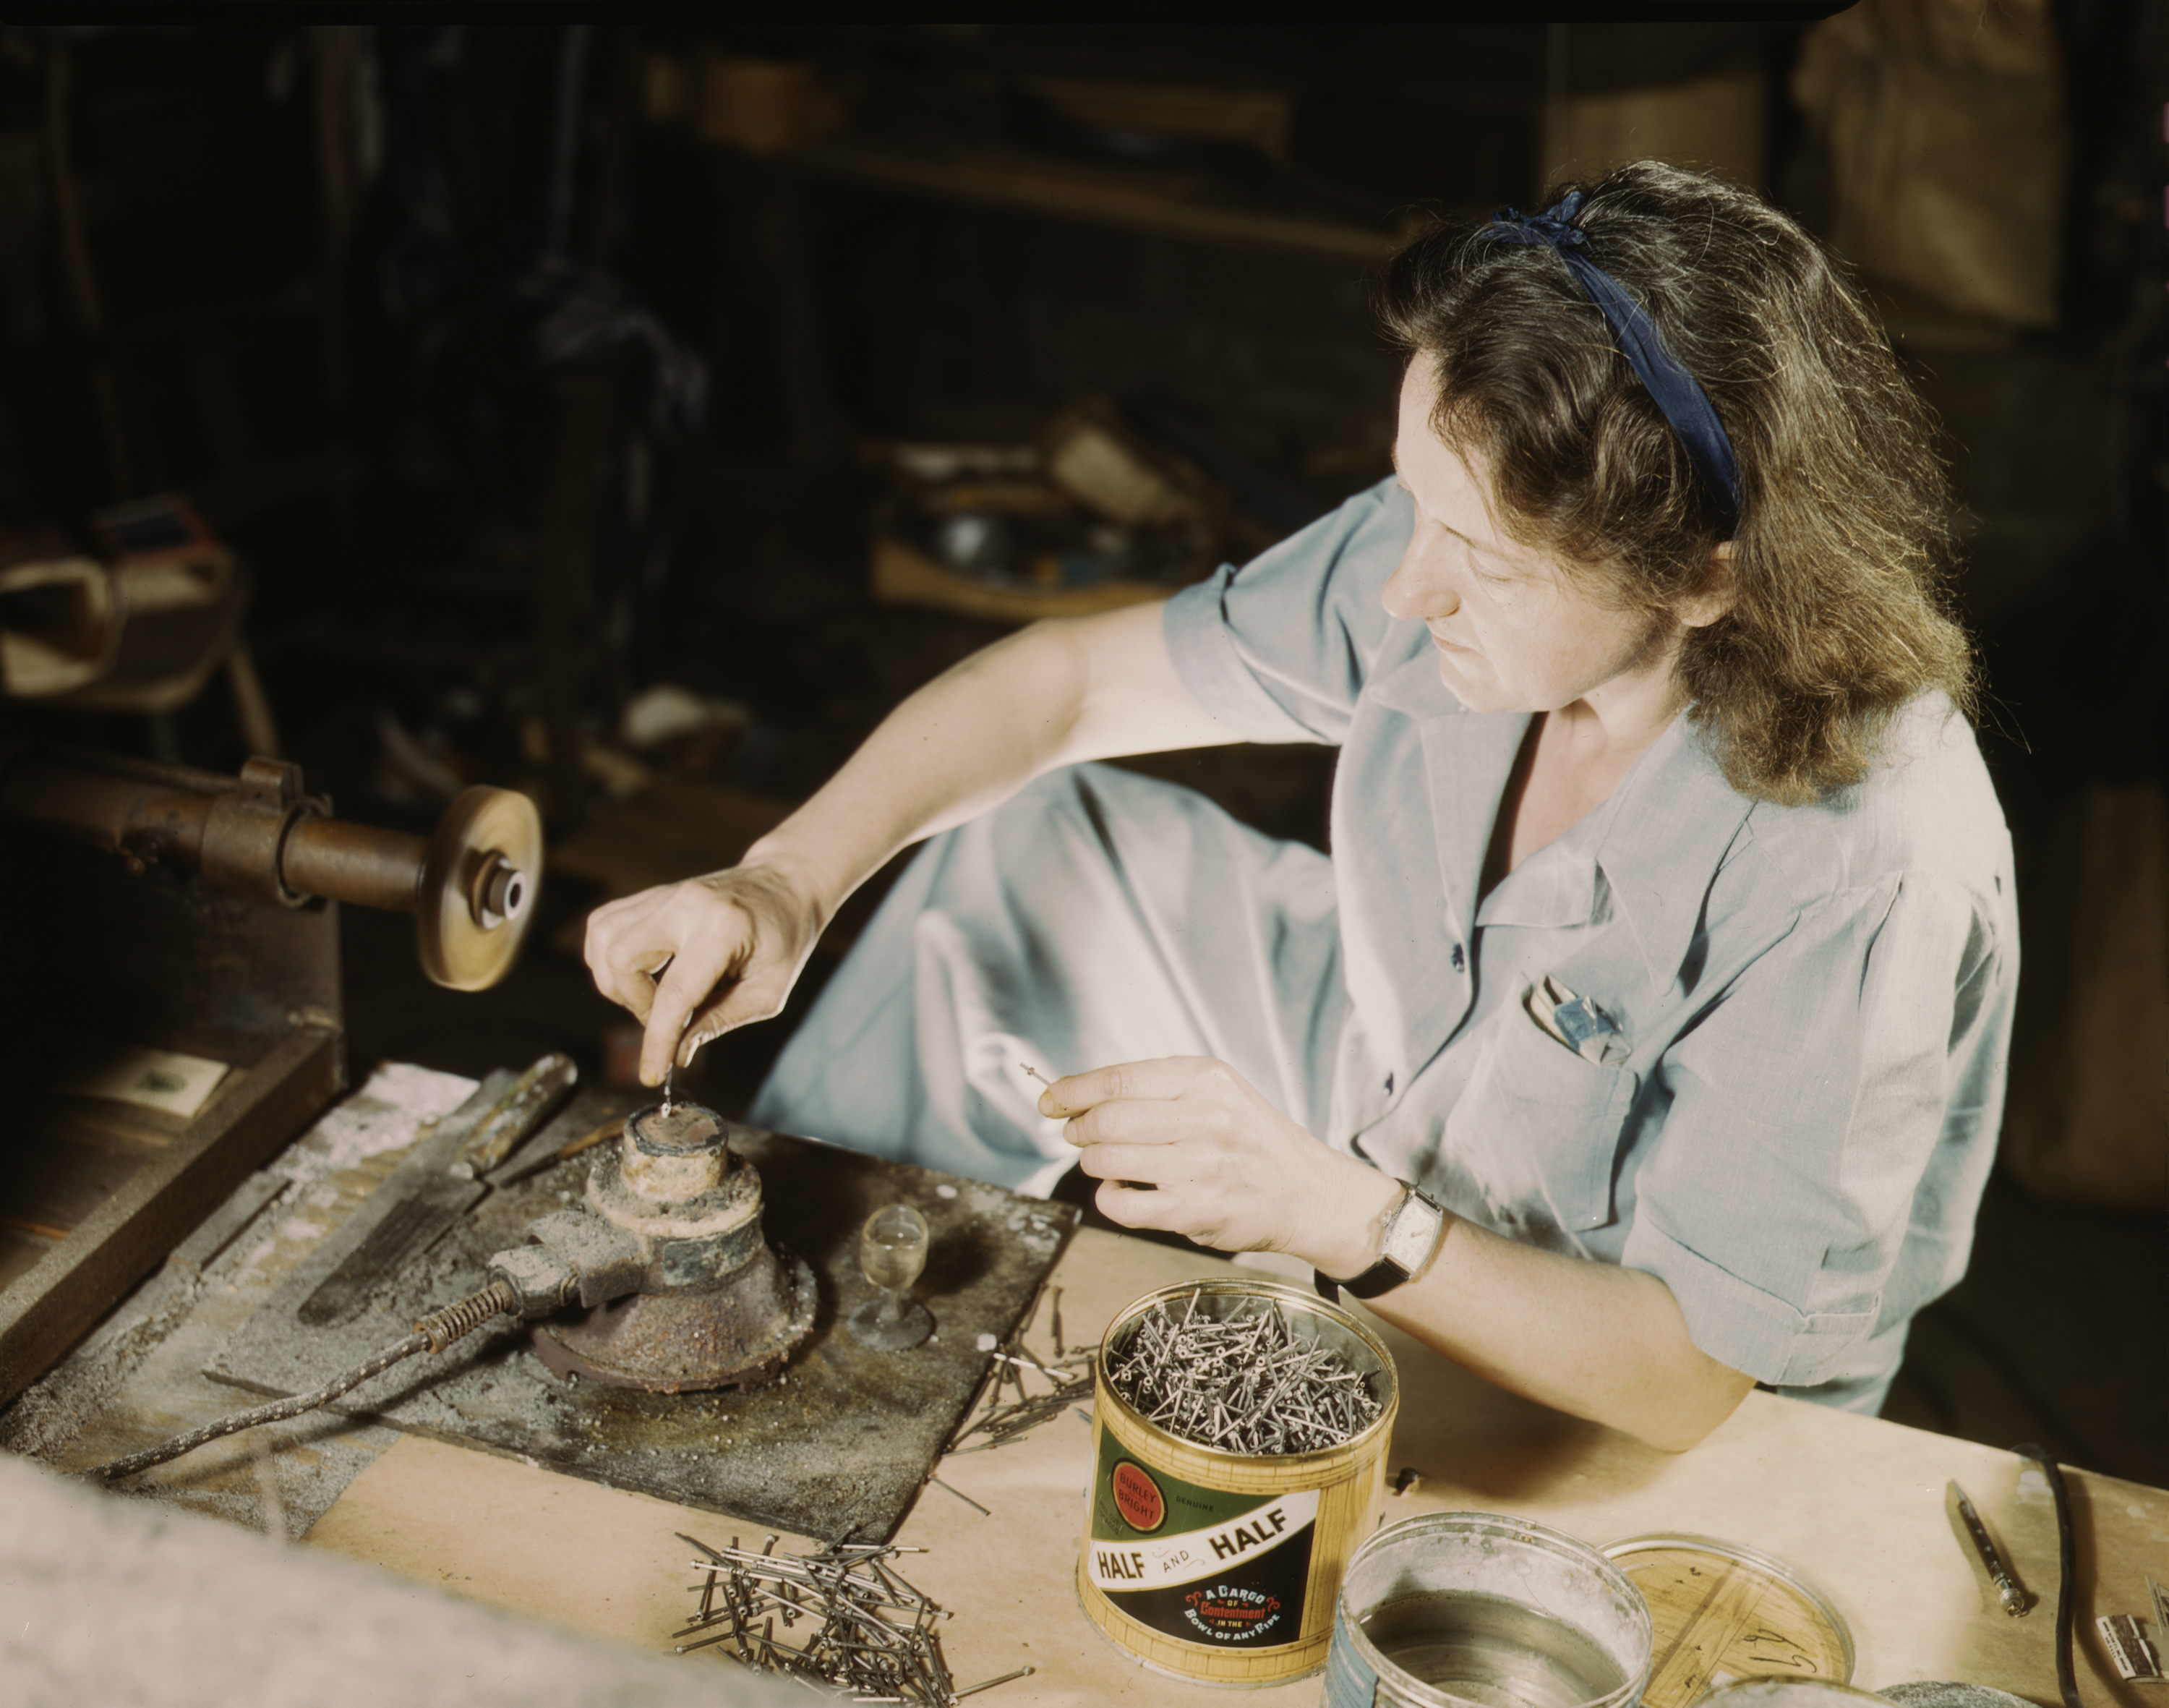 Woman Tin Plates Needles for Baxter Laboratories